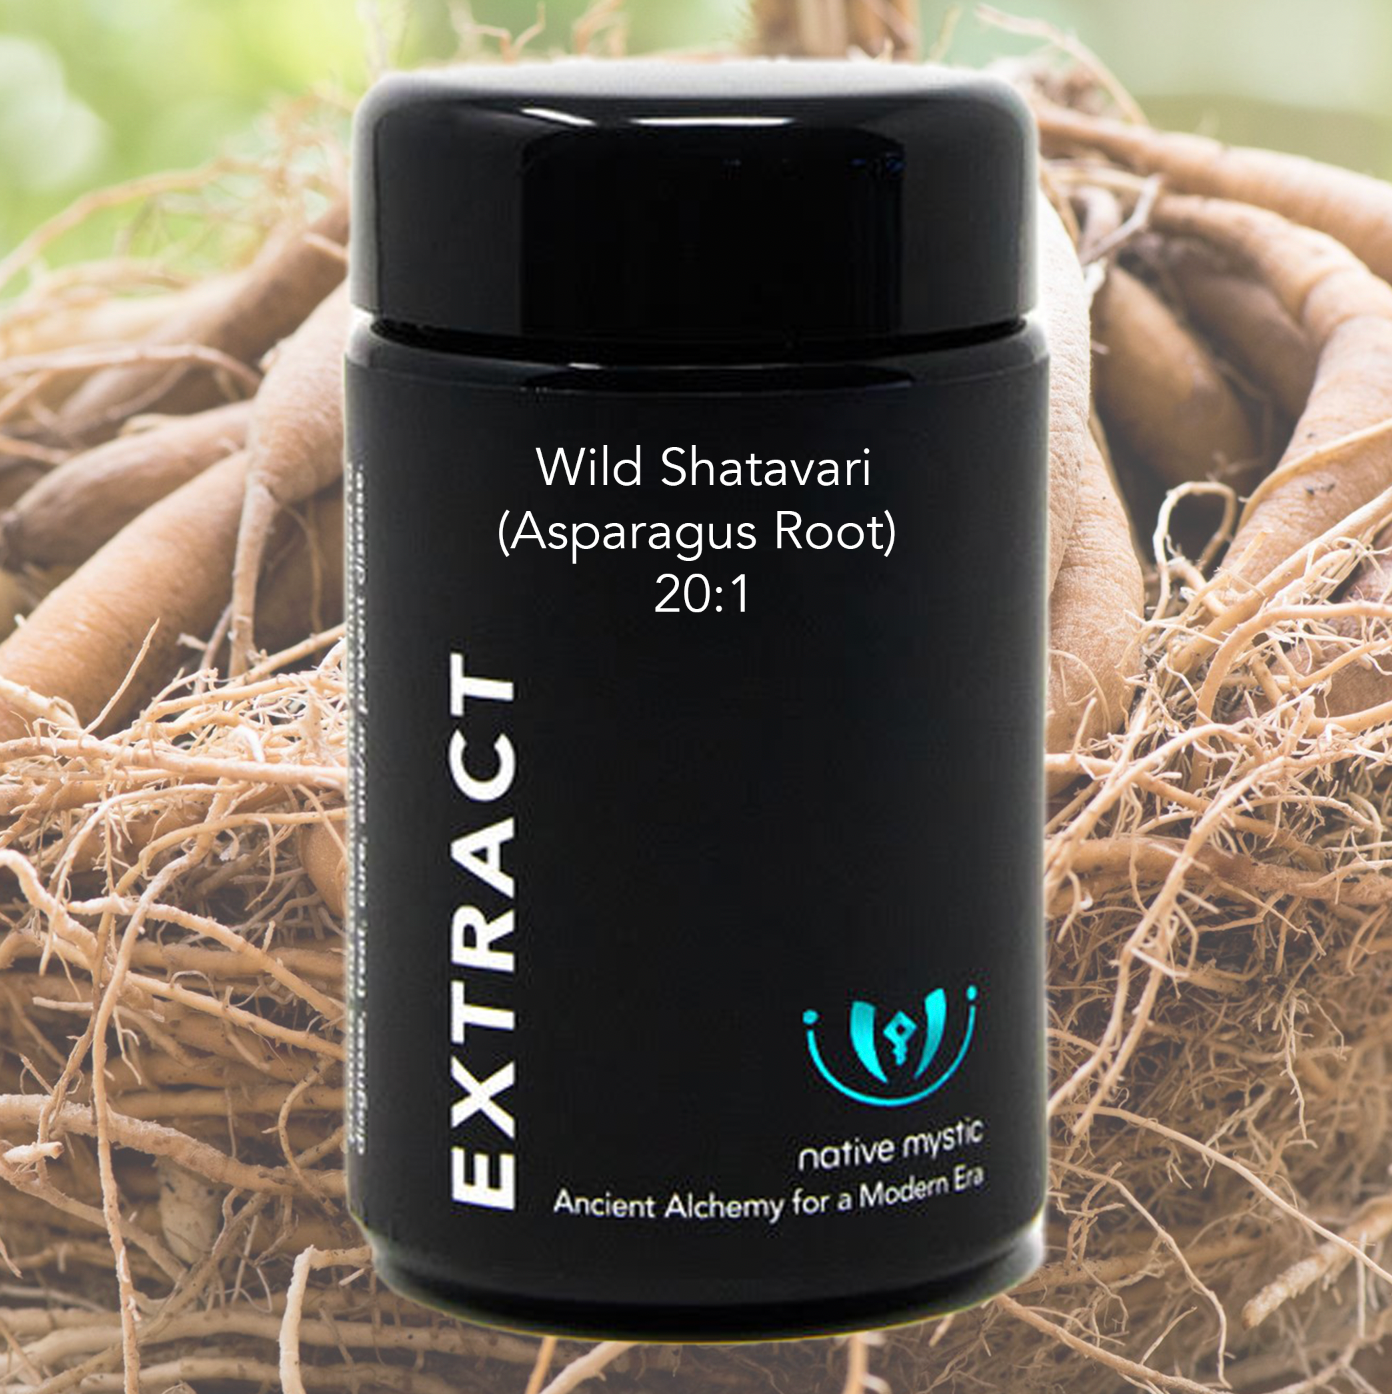 Wild Shatavari Asparagus Root Extract 20:1